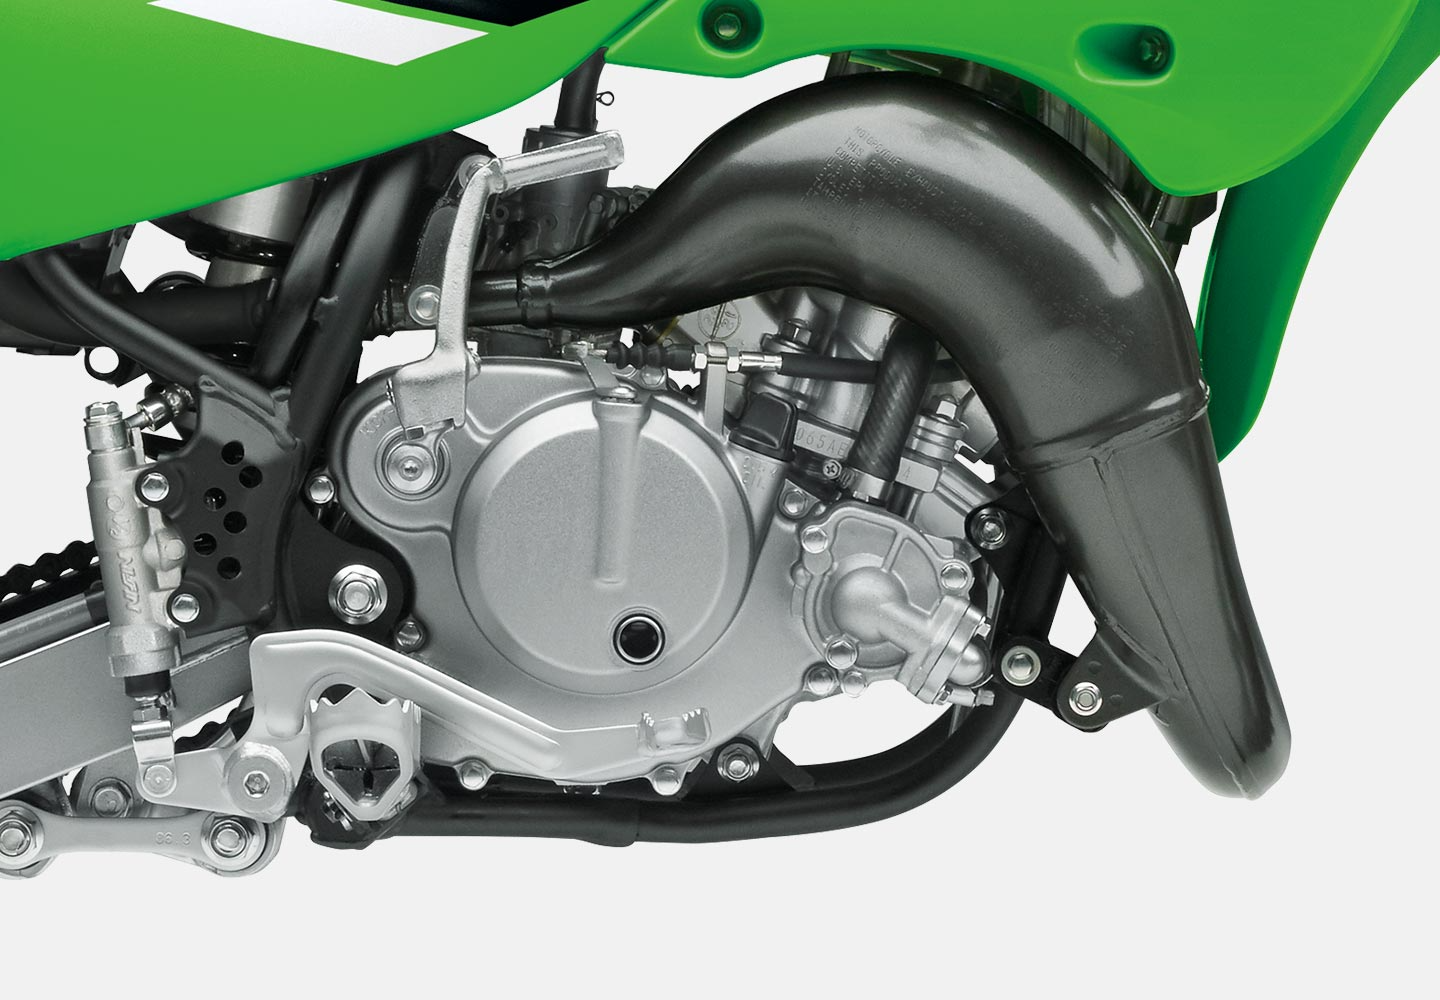 Kawasaki KX™65 | Motocross Motorcycle | Introductory Dirtbike